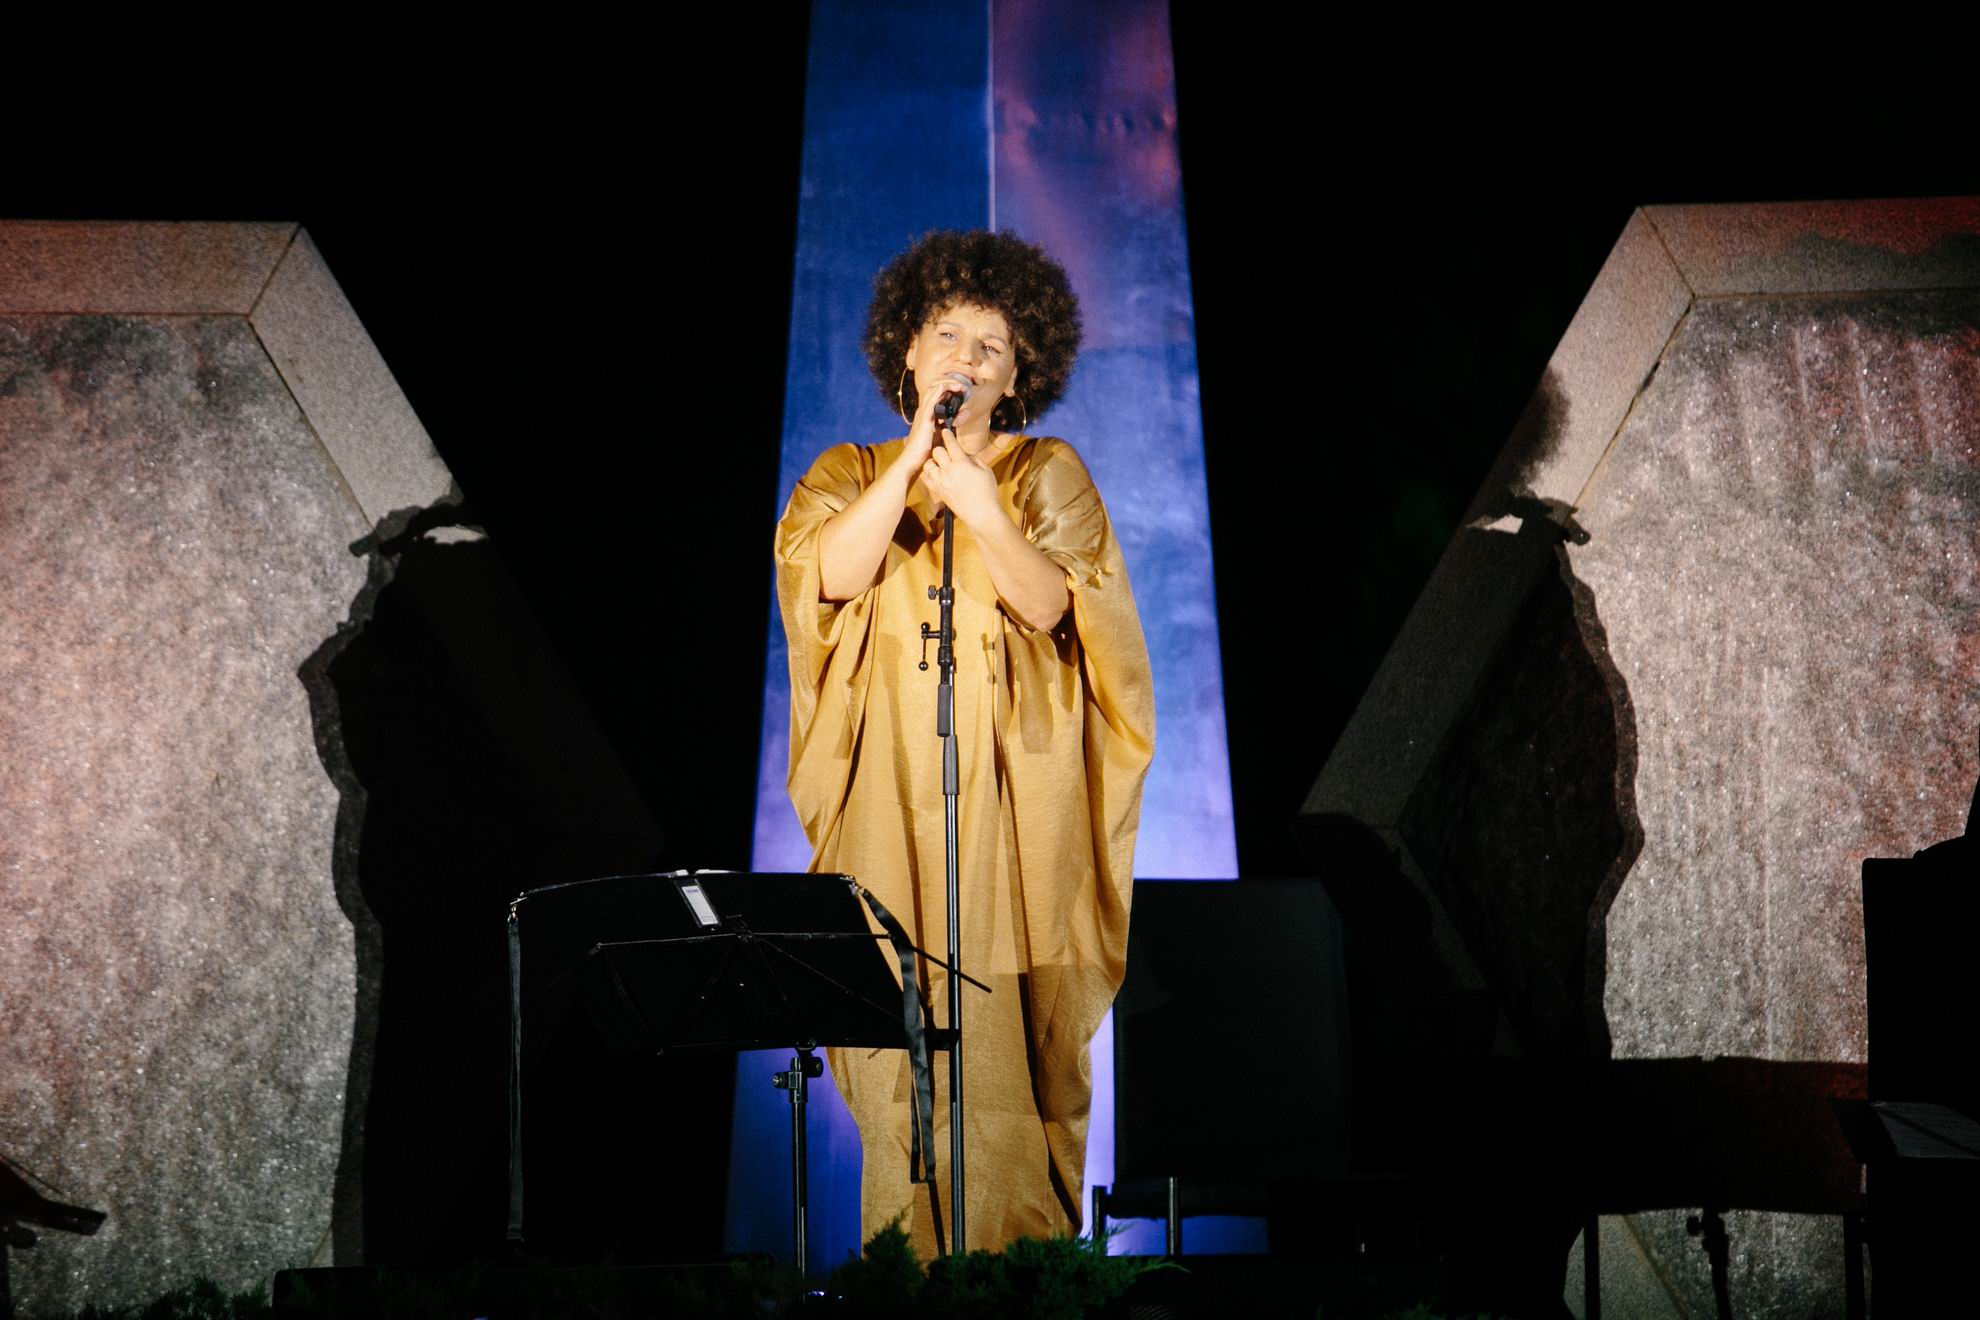 Israeli singer Karolina performing at the concert. Aranen Productions: Evyatar Nissan 